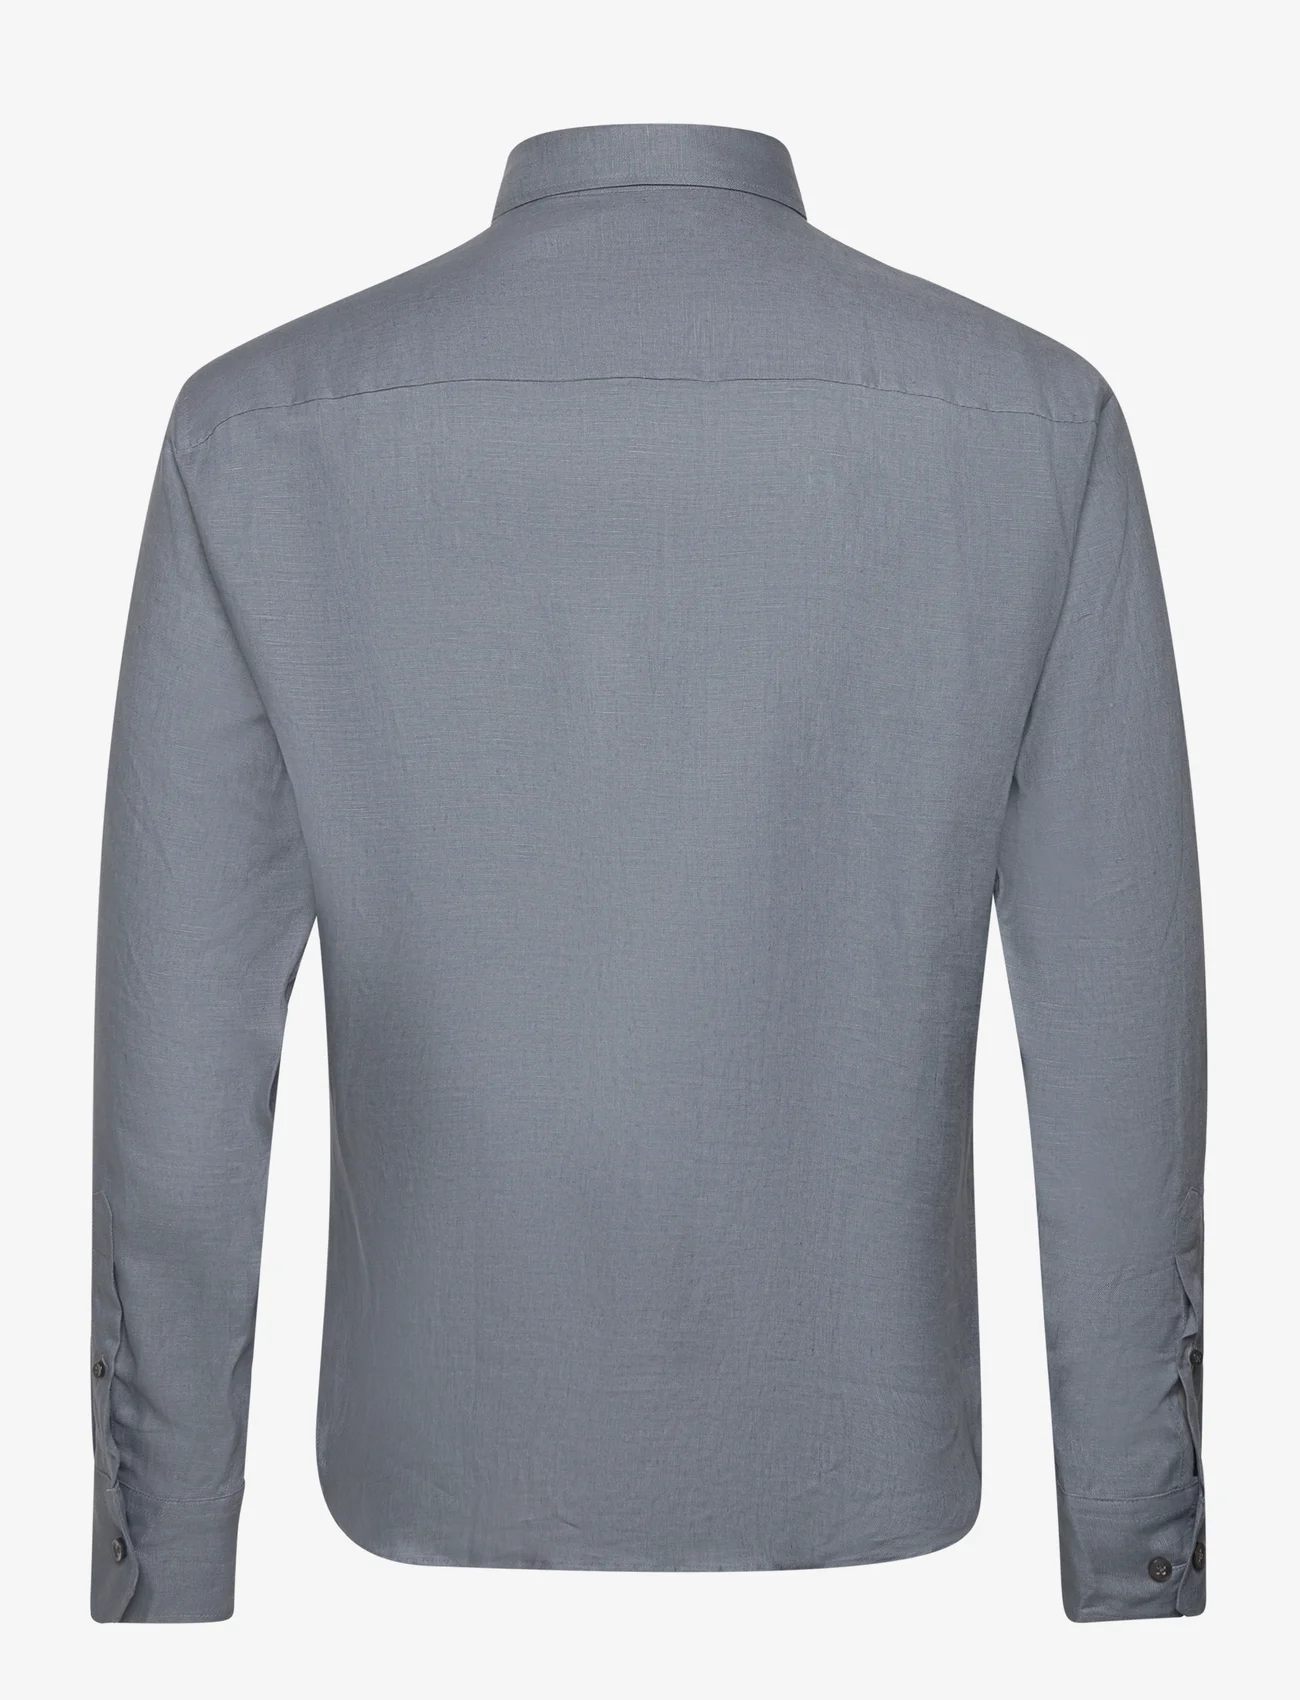 Bosweel Shirts Est. 1937 - Regular fit Men shirt - linen shirts - grey - 1